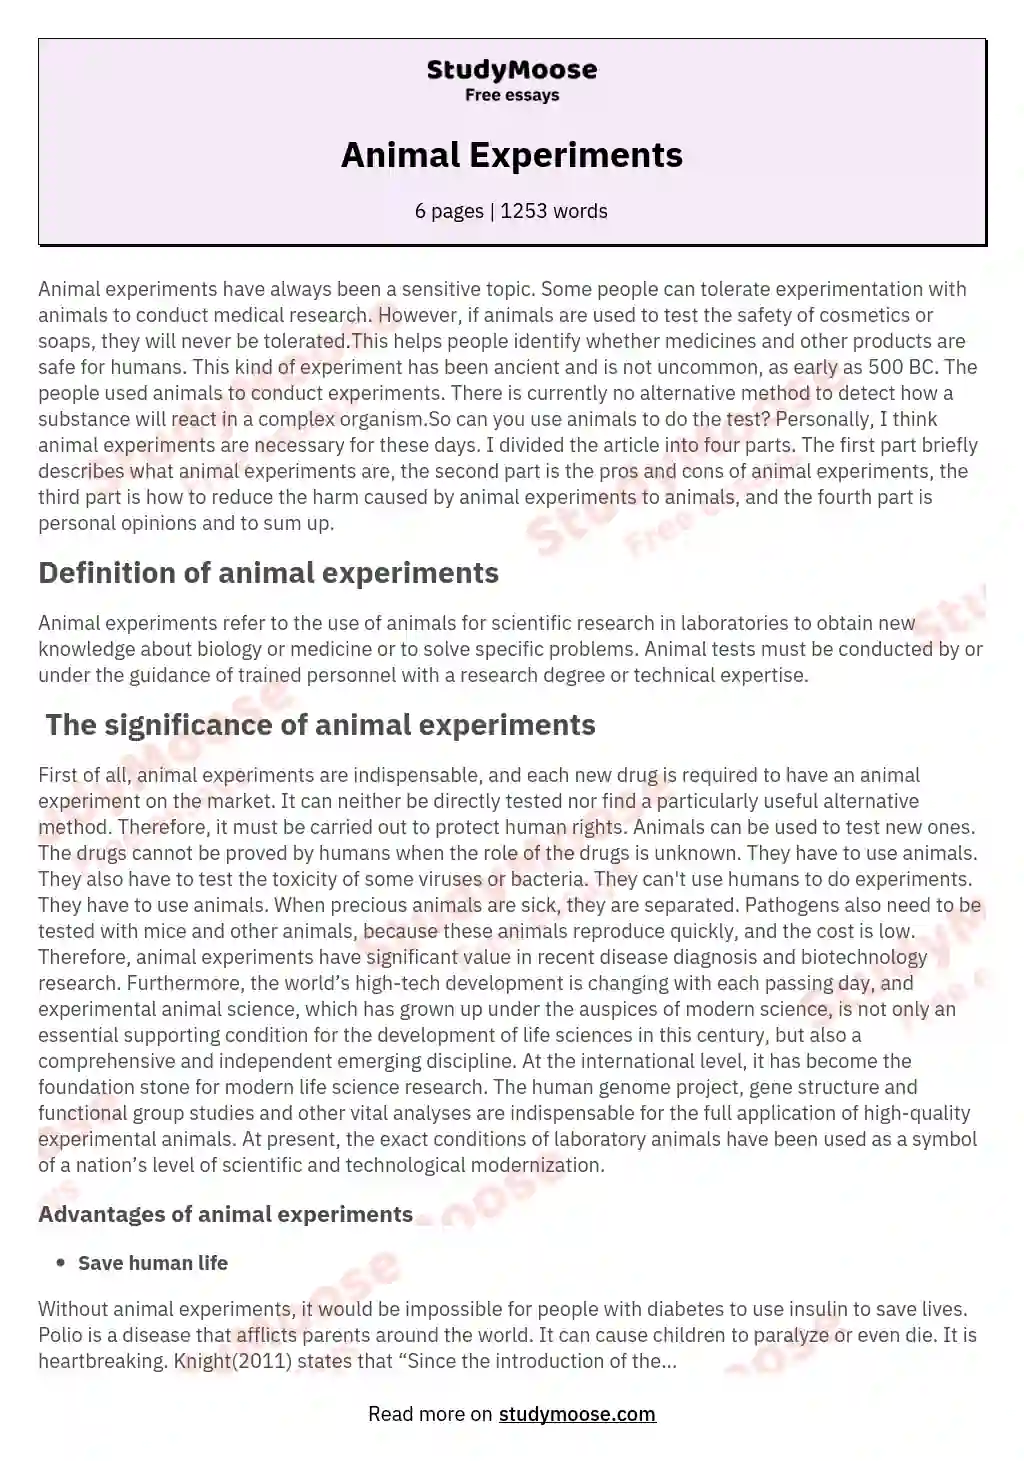 ielts essay on animal experiments